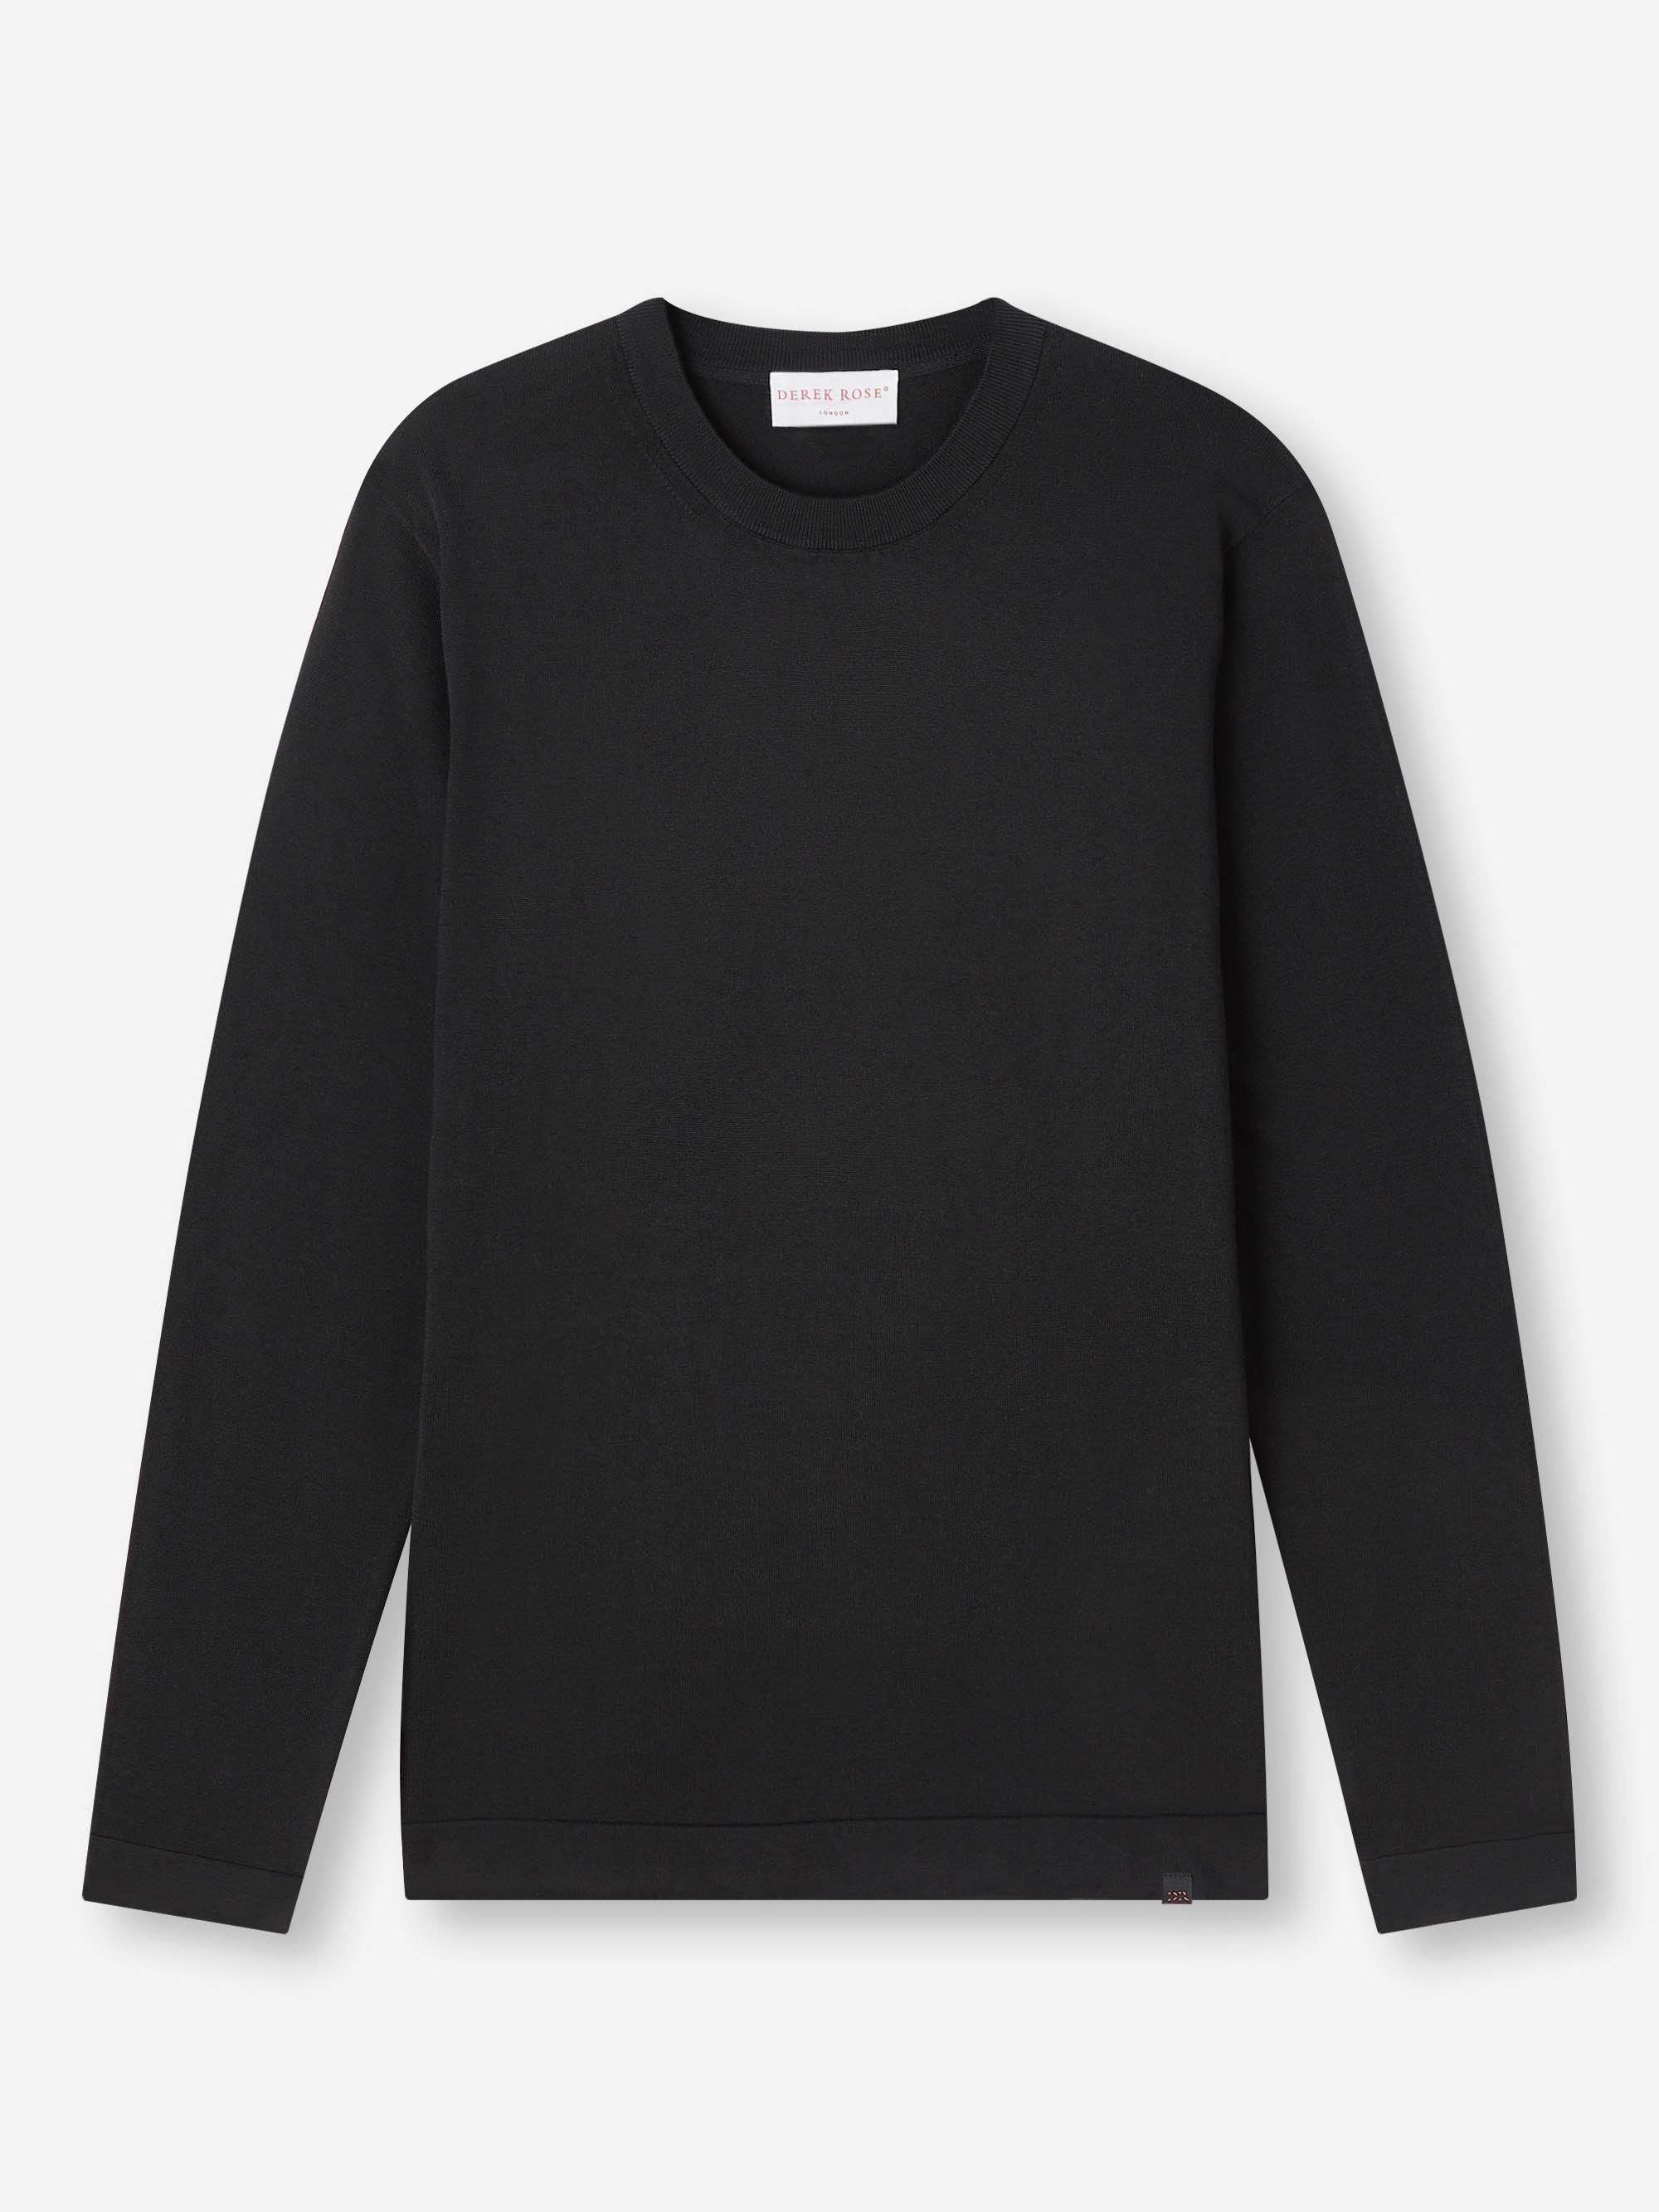 Men's Sweater Jacob Sea Island Cotton Black